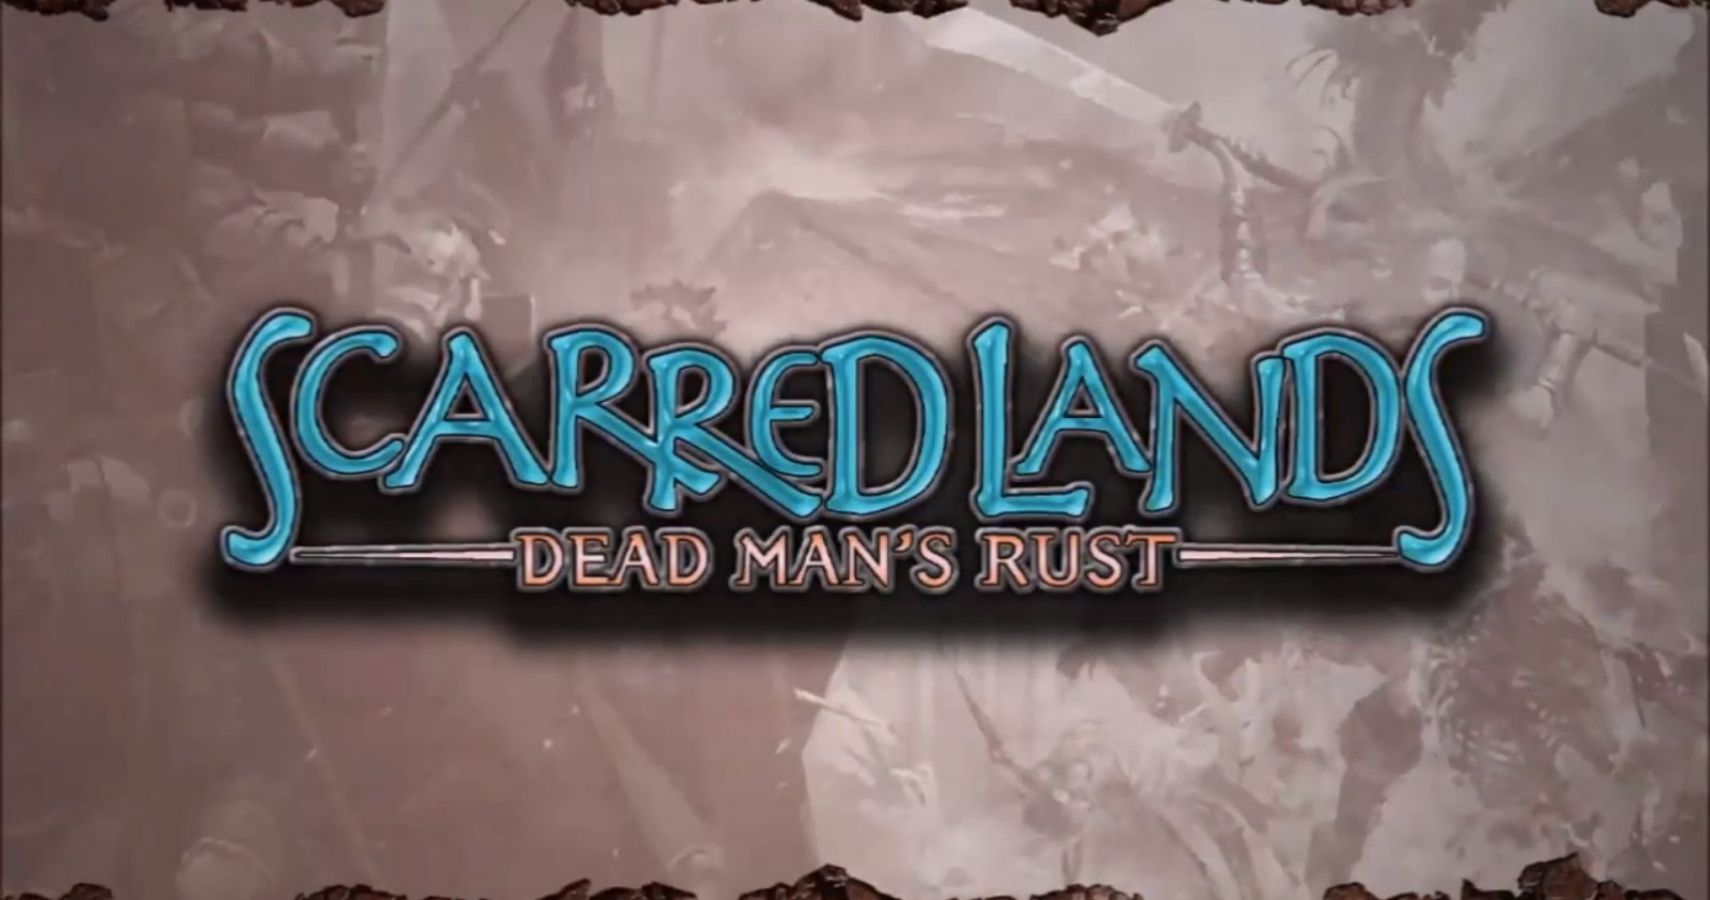 Scarred Lands Dead Man's Rust Kickstarter feature image